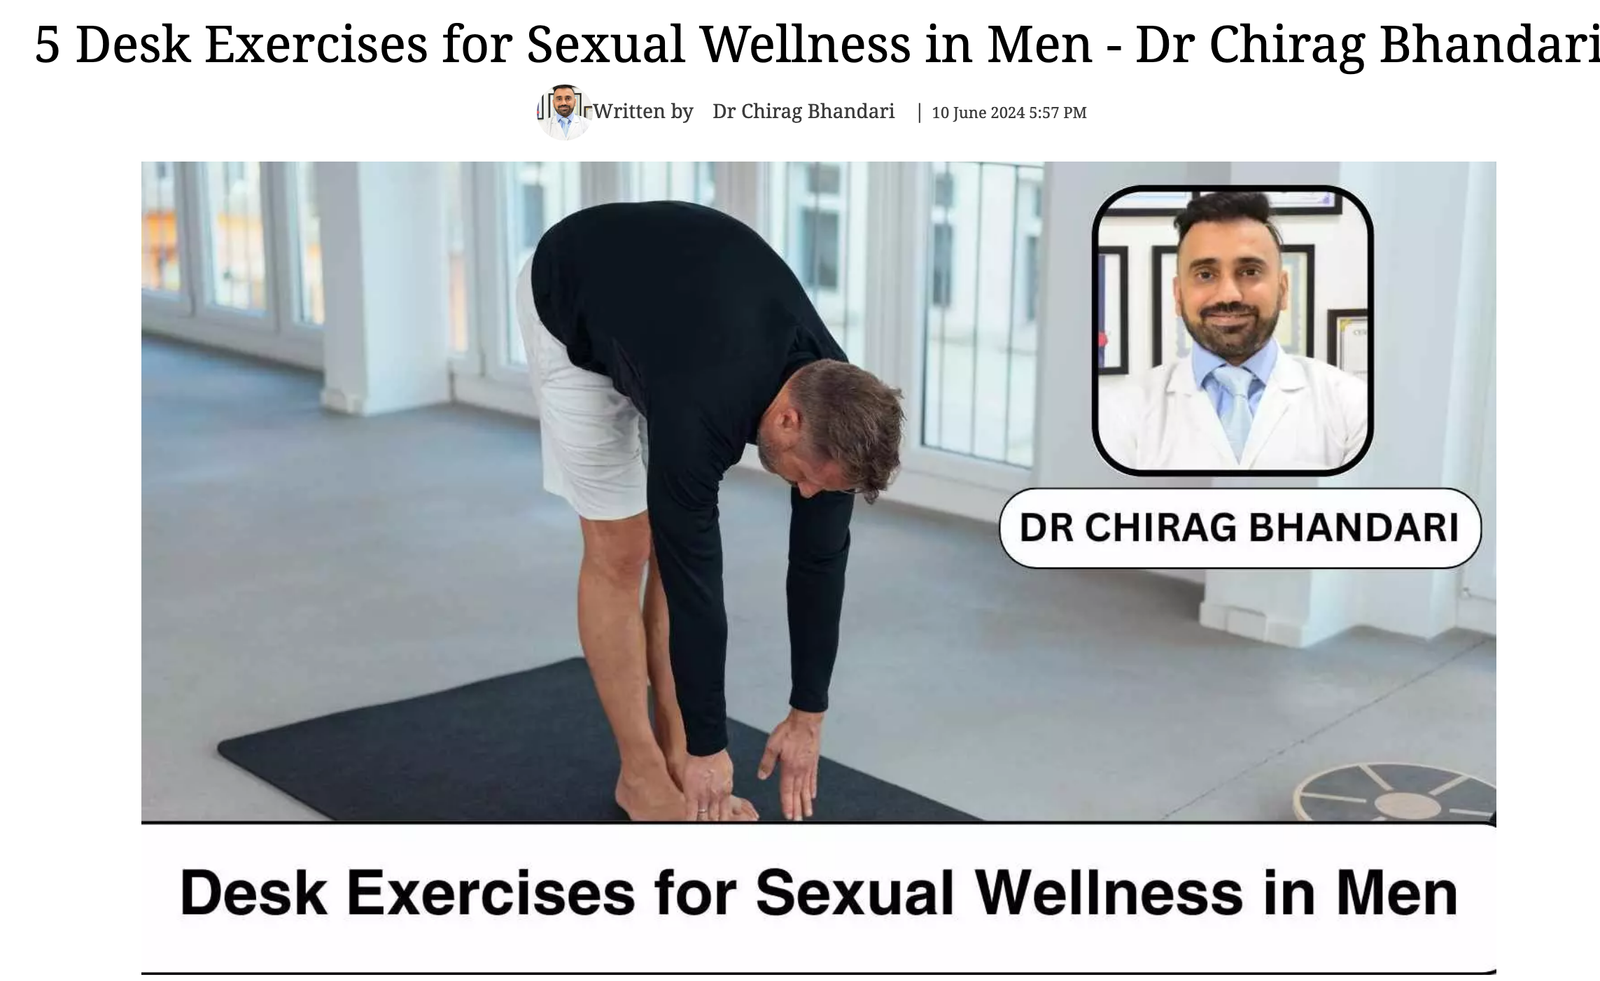 5 Desk Exercises for Sexual Wellness in Men - Dr Chirag Bhandari